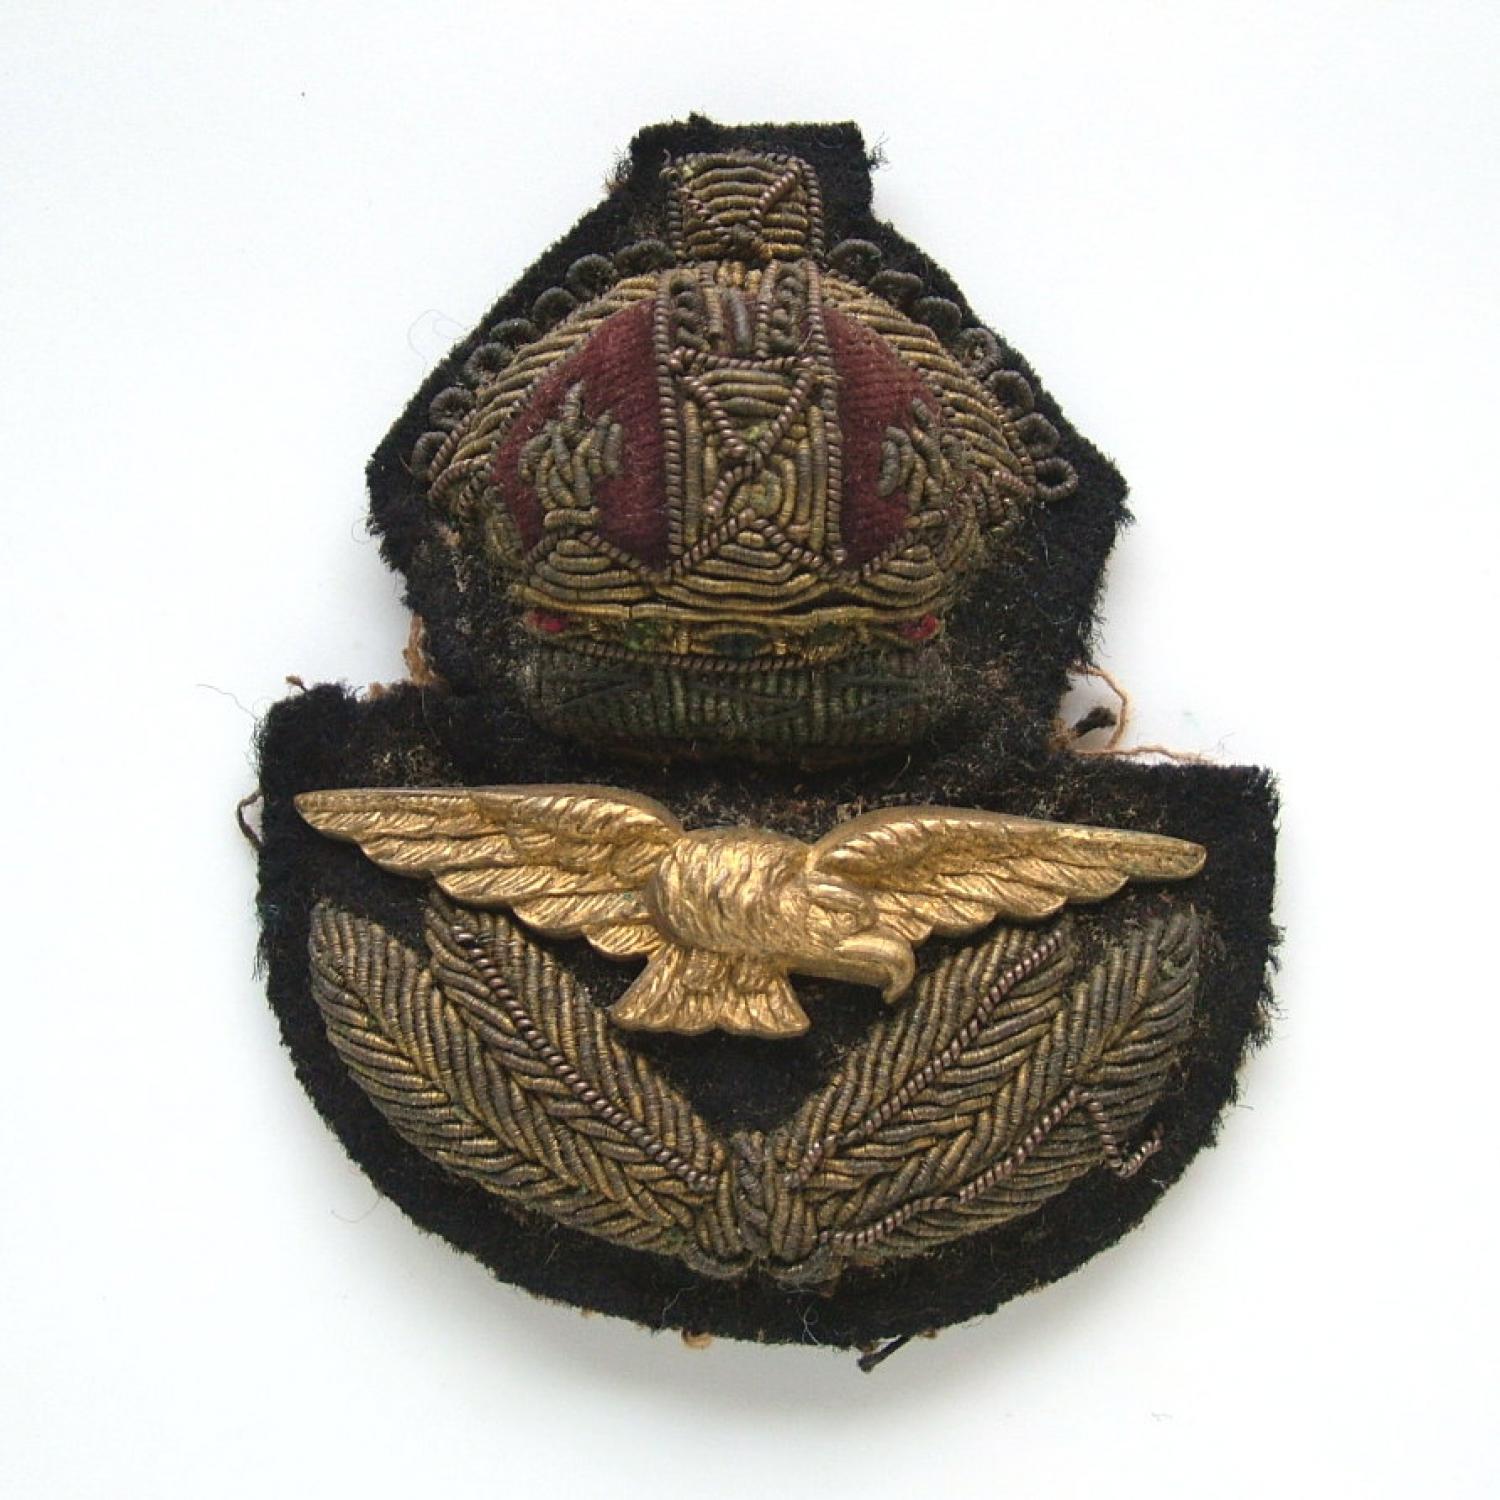 RAF Officer Rank Service Dress Cap Badge